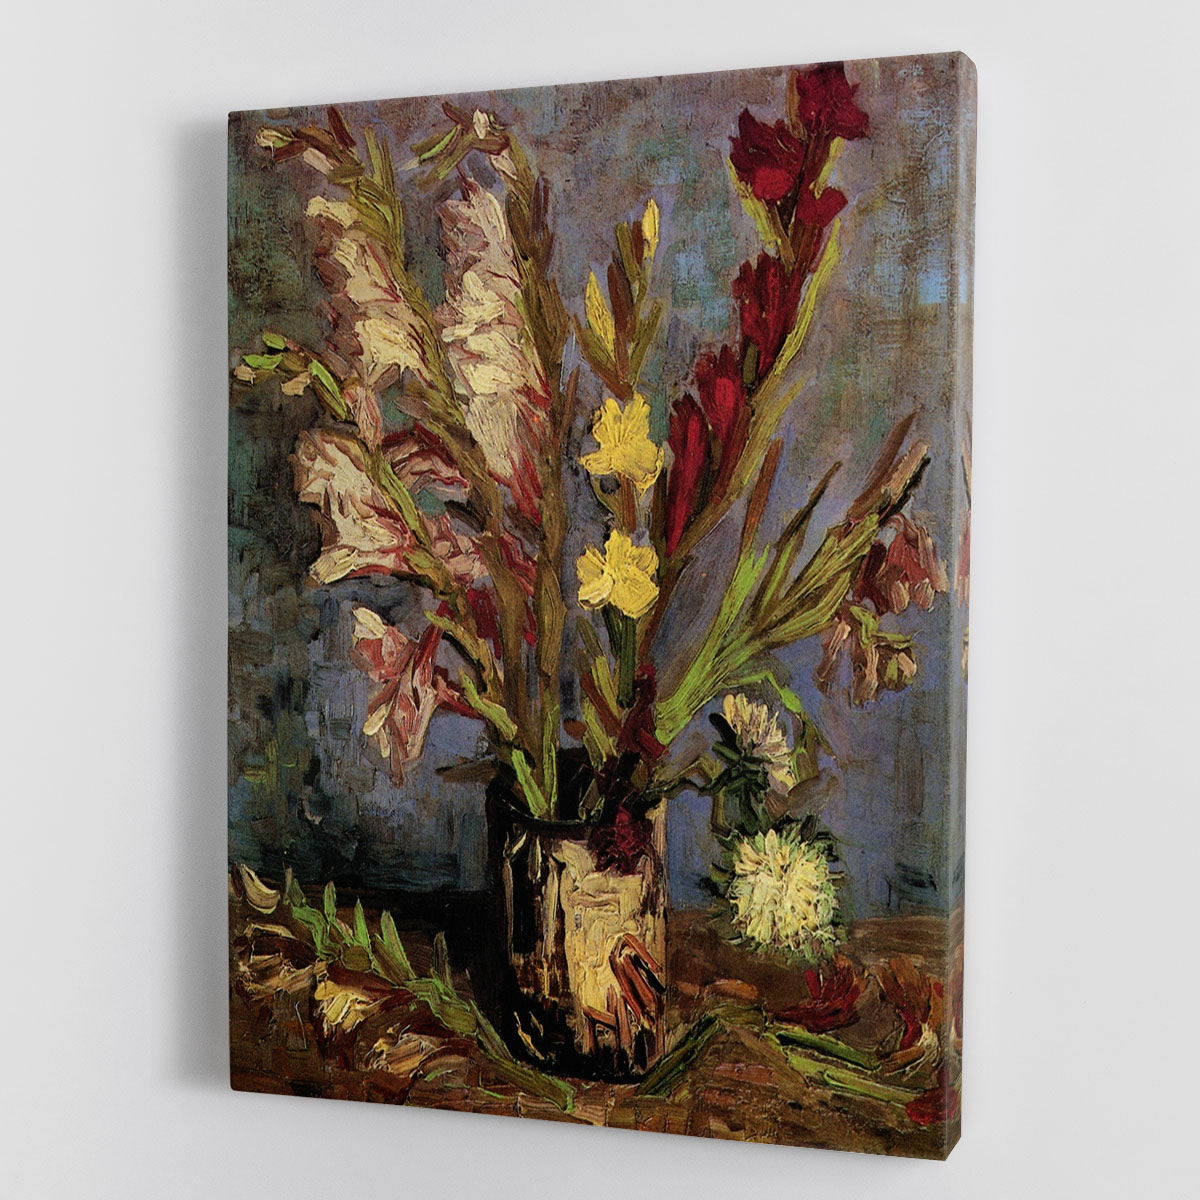 Vase with Gladioli 4 by Van Gogh Canvas Print or Poster - Canvas Art Rocks - 1